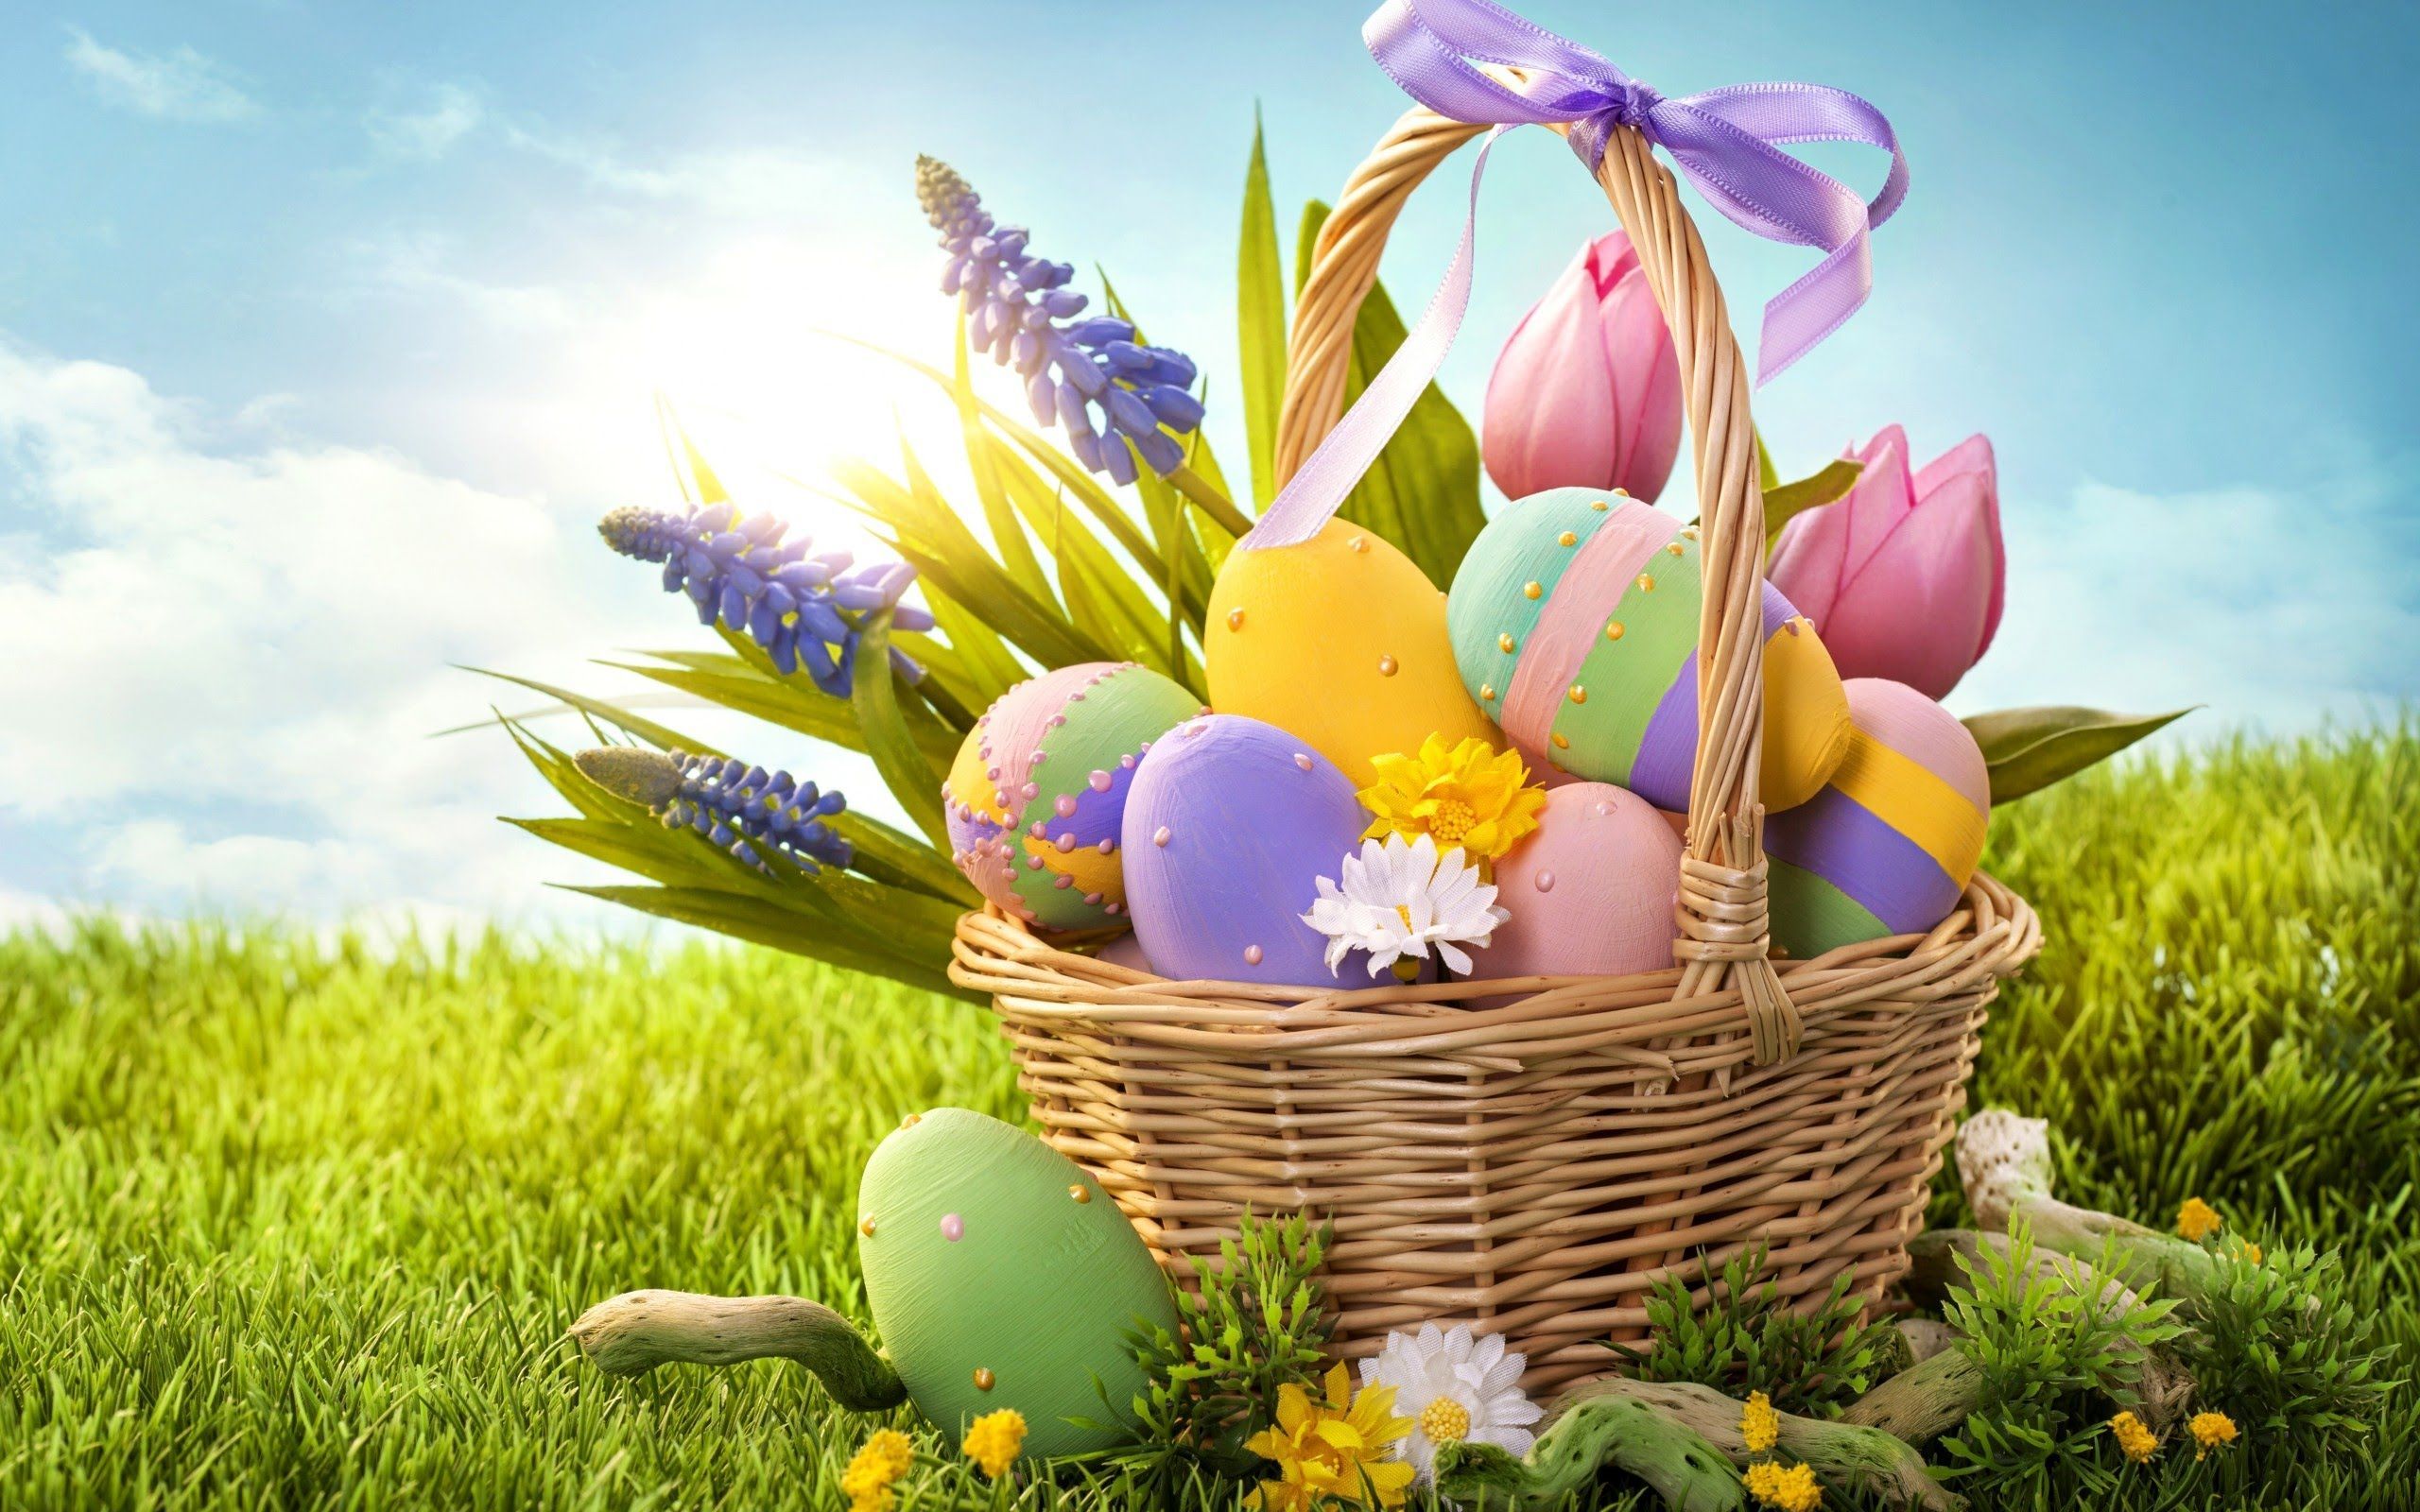 Happy Easter Image. Happy easter wallpaper, Easter wallpaper, Easter egg basket